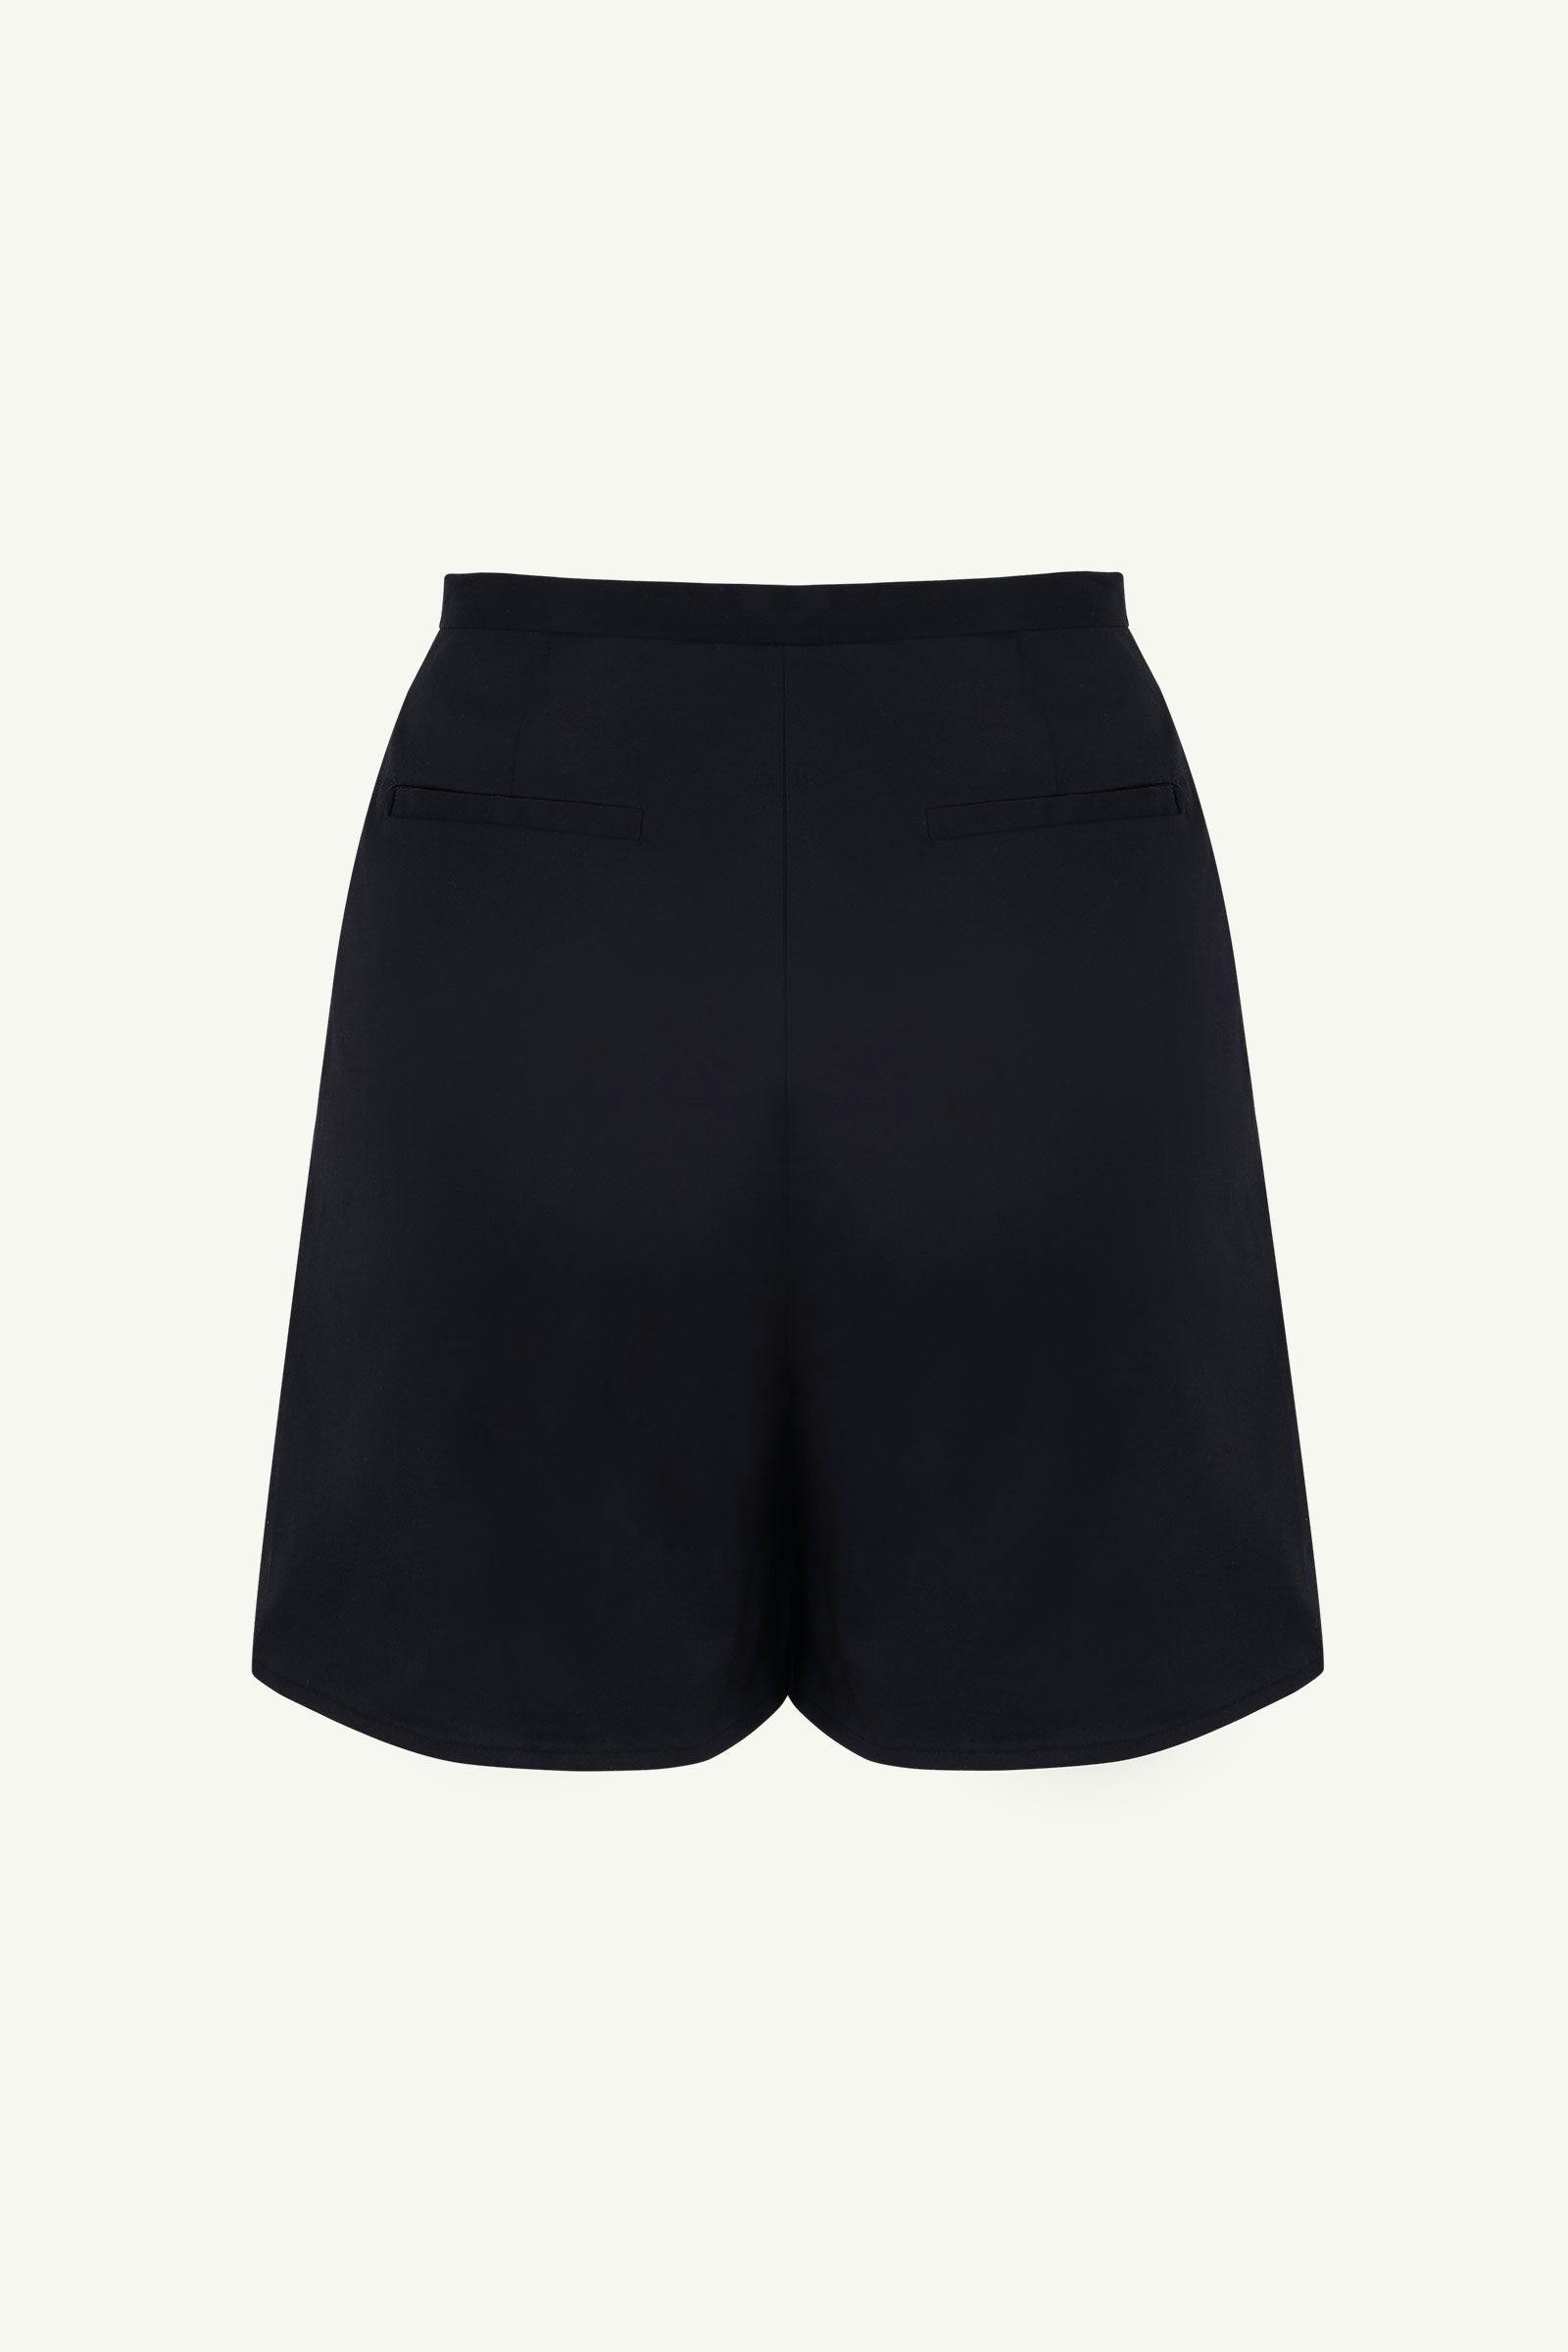 Tab Shorts | 100% Organic Cotton Women's Navy Colour Shorts | Something ...